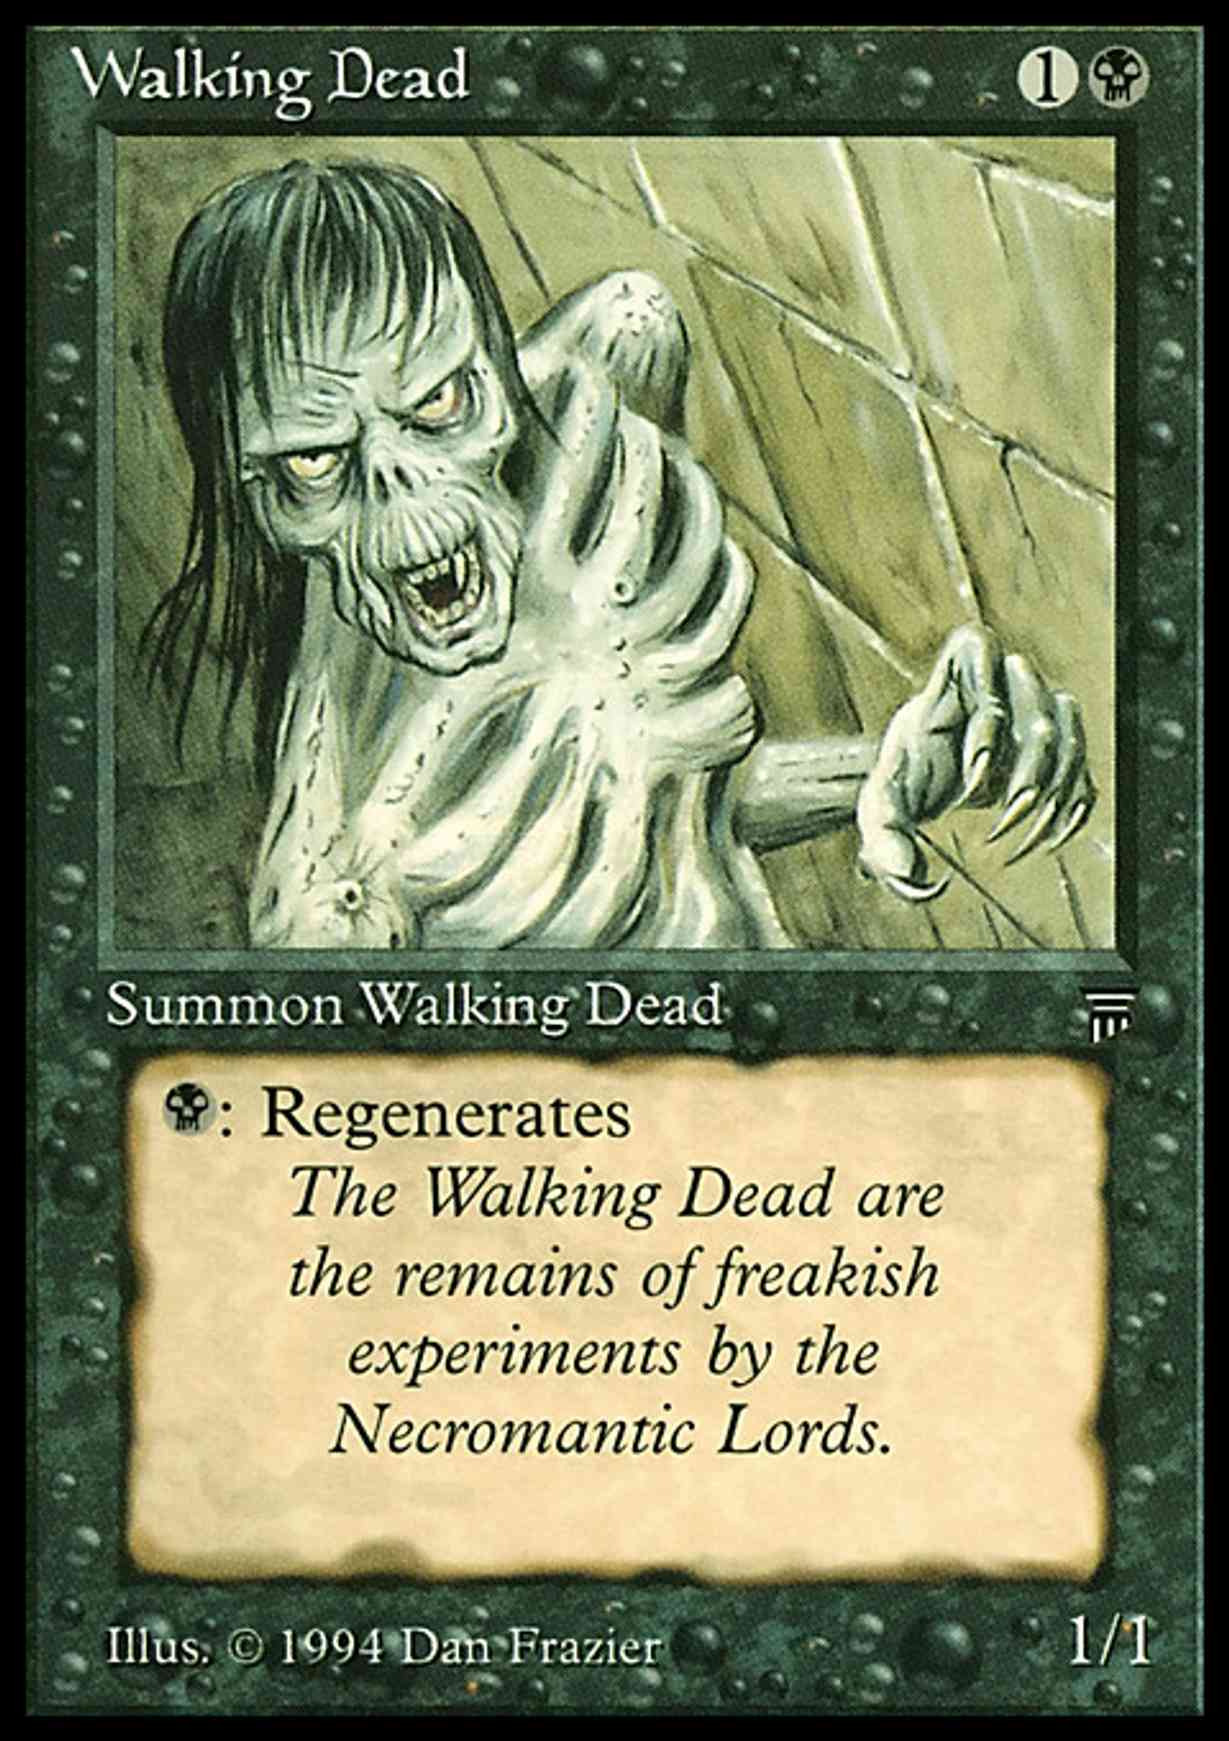 Walking Dead magic card front